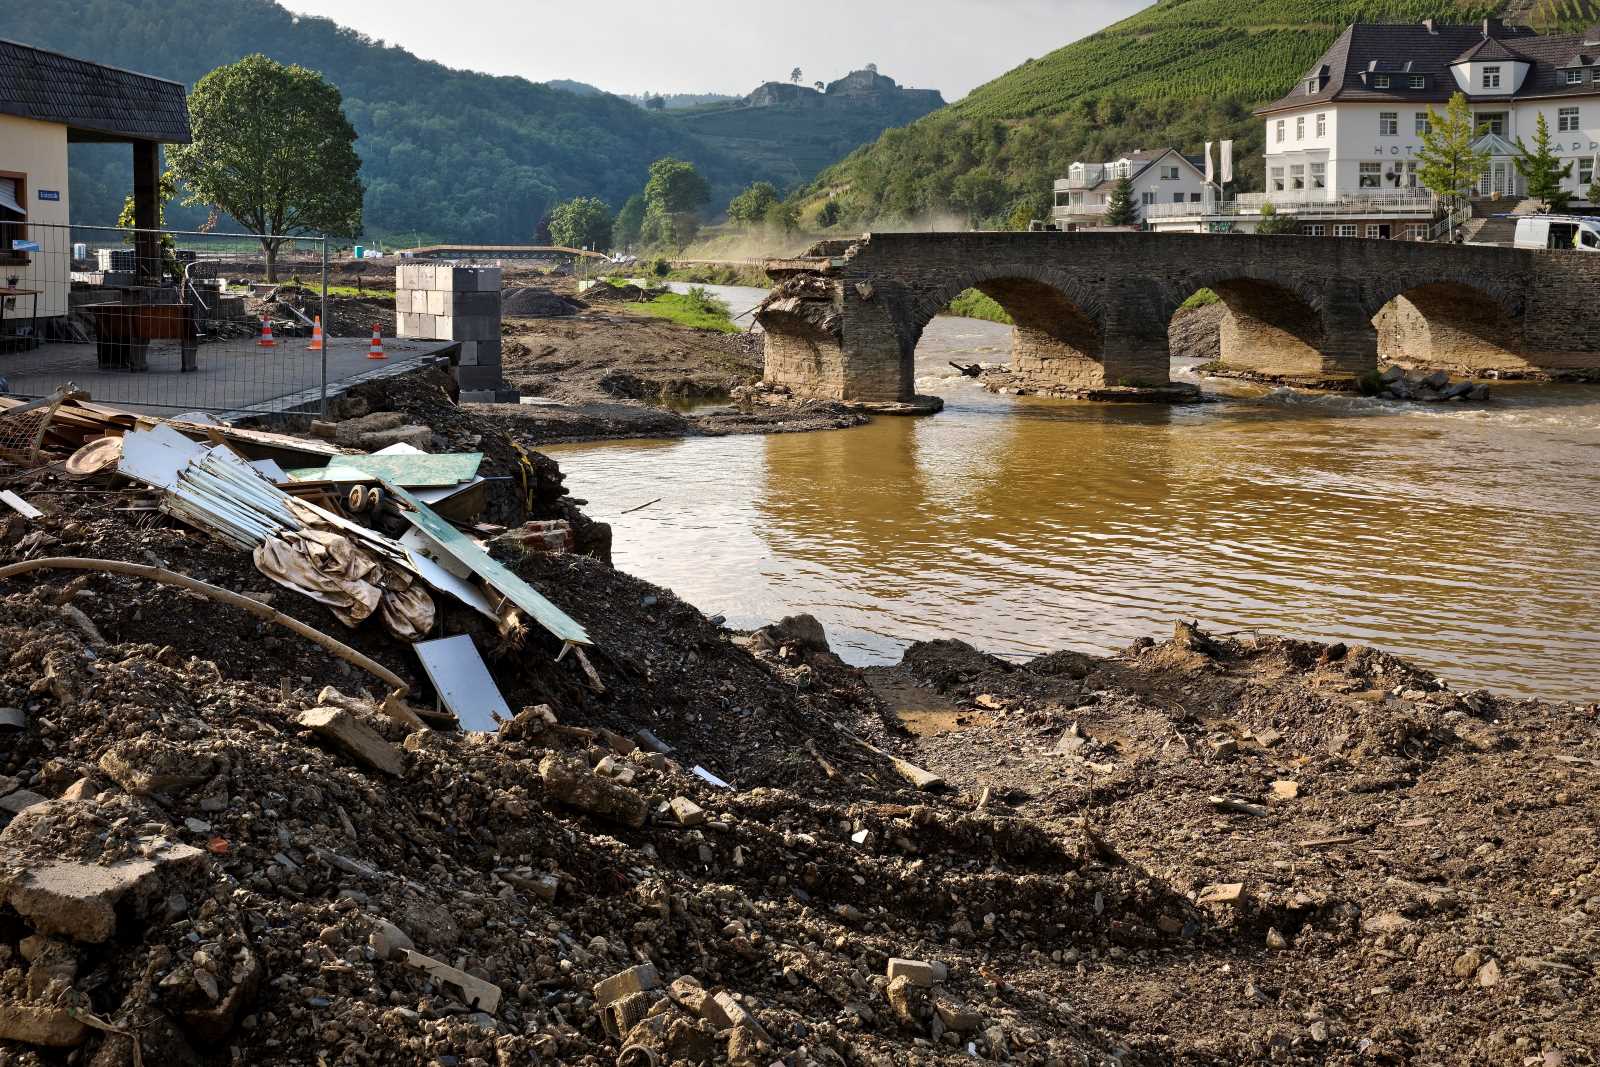 Flood damage in Germany last summer.